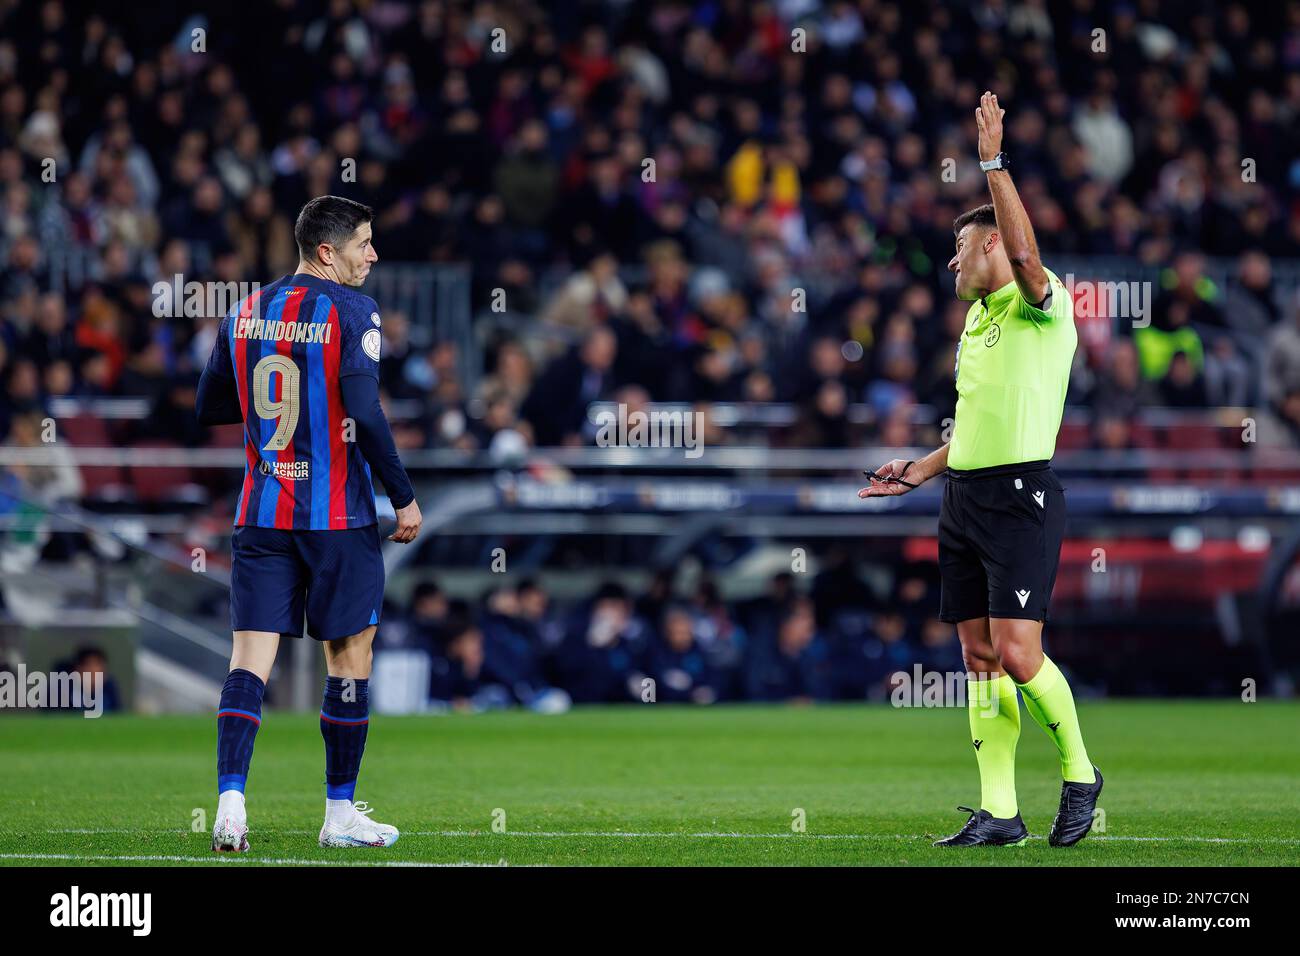 BARCELONA - JAN 25: Gil Manzano (R) and Lewandowski (L) argue during the Copa del Rey match between FC Barcelona and Real Sociedad at the Spotify Camp Stock Photo